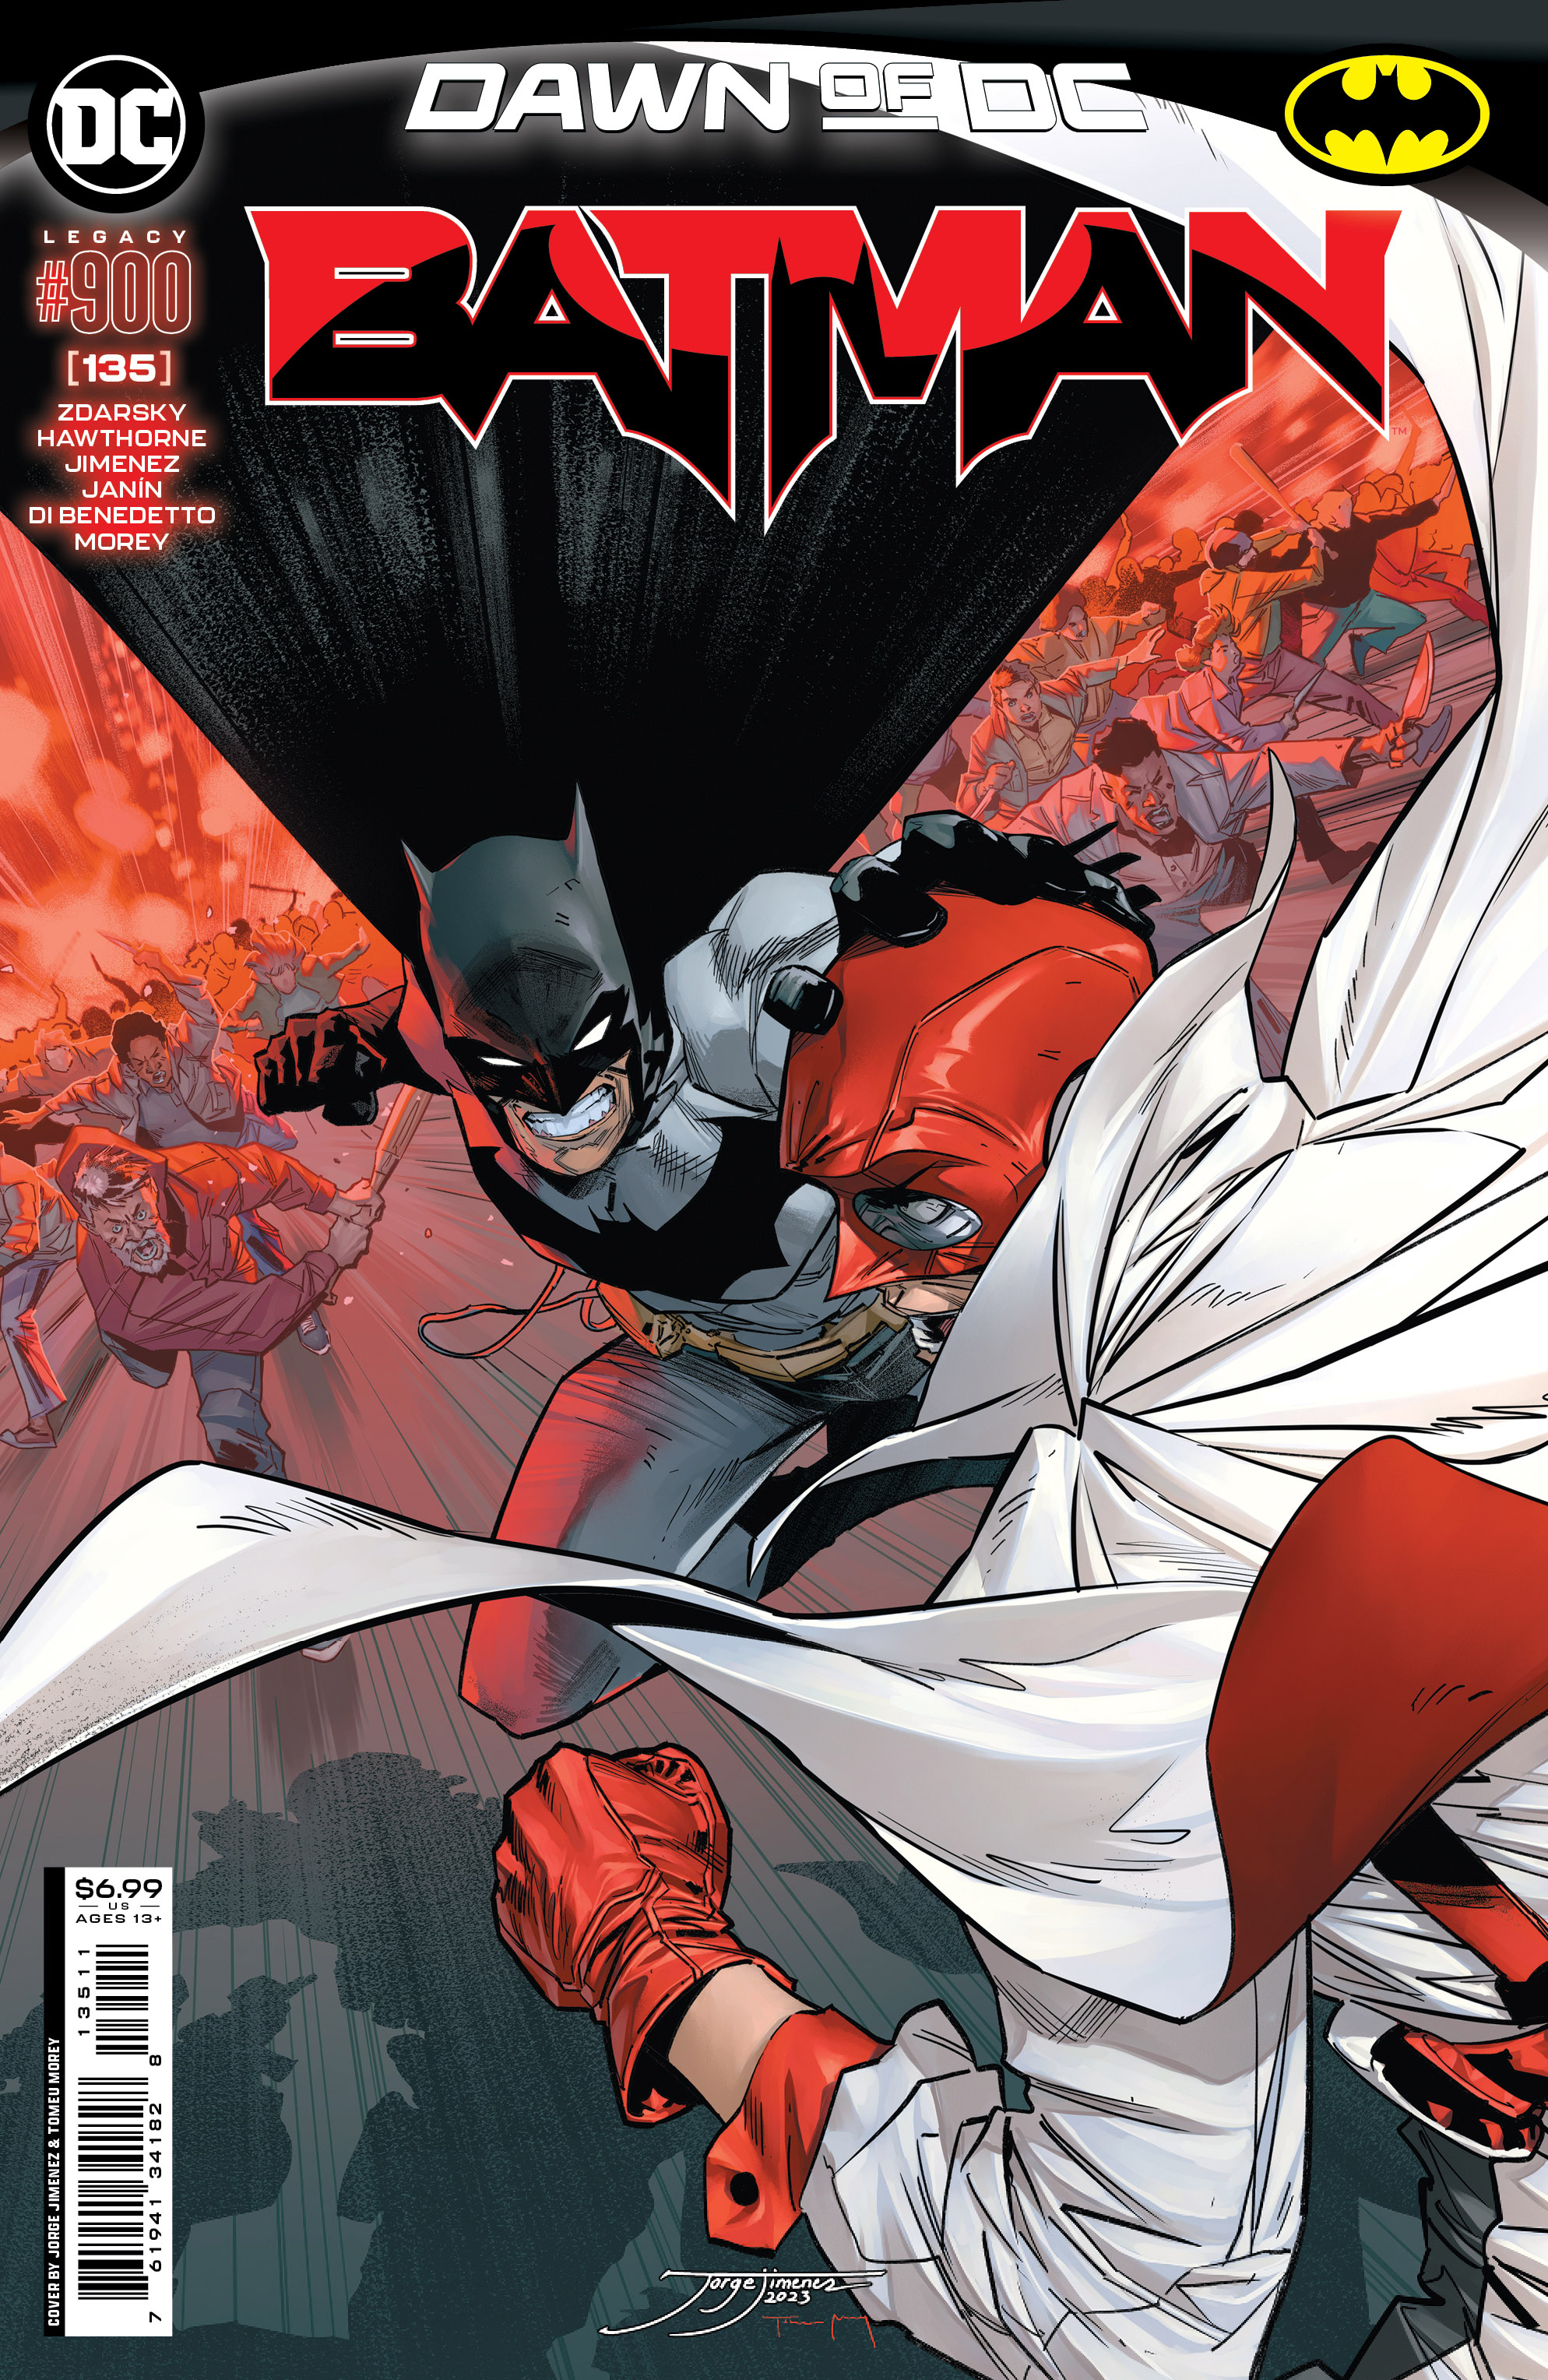 Batman #135 Cover A Jorge Jimenez (#900) (2016)